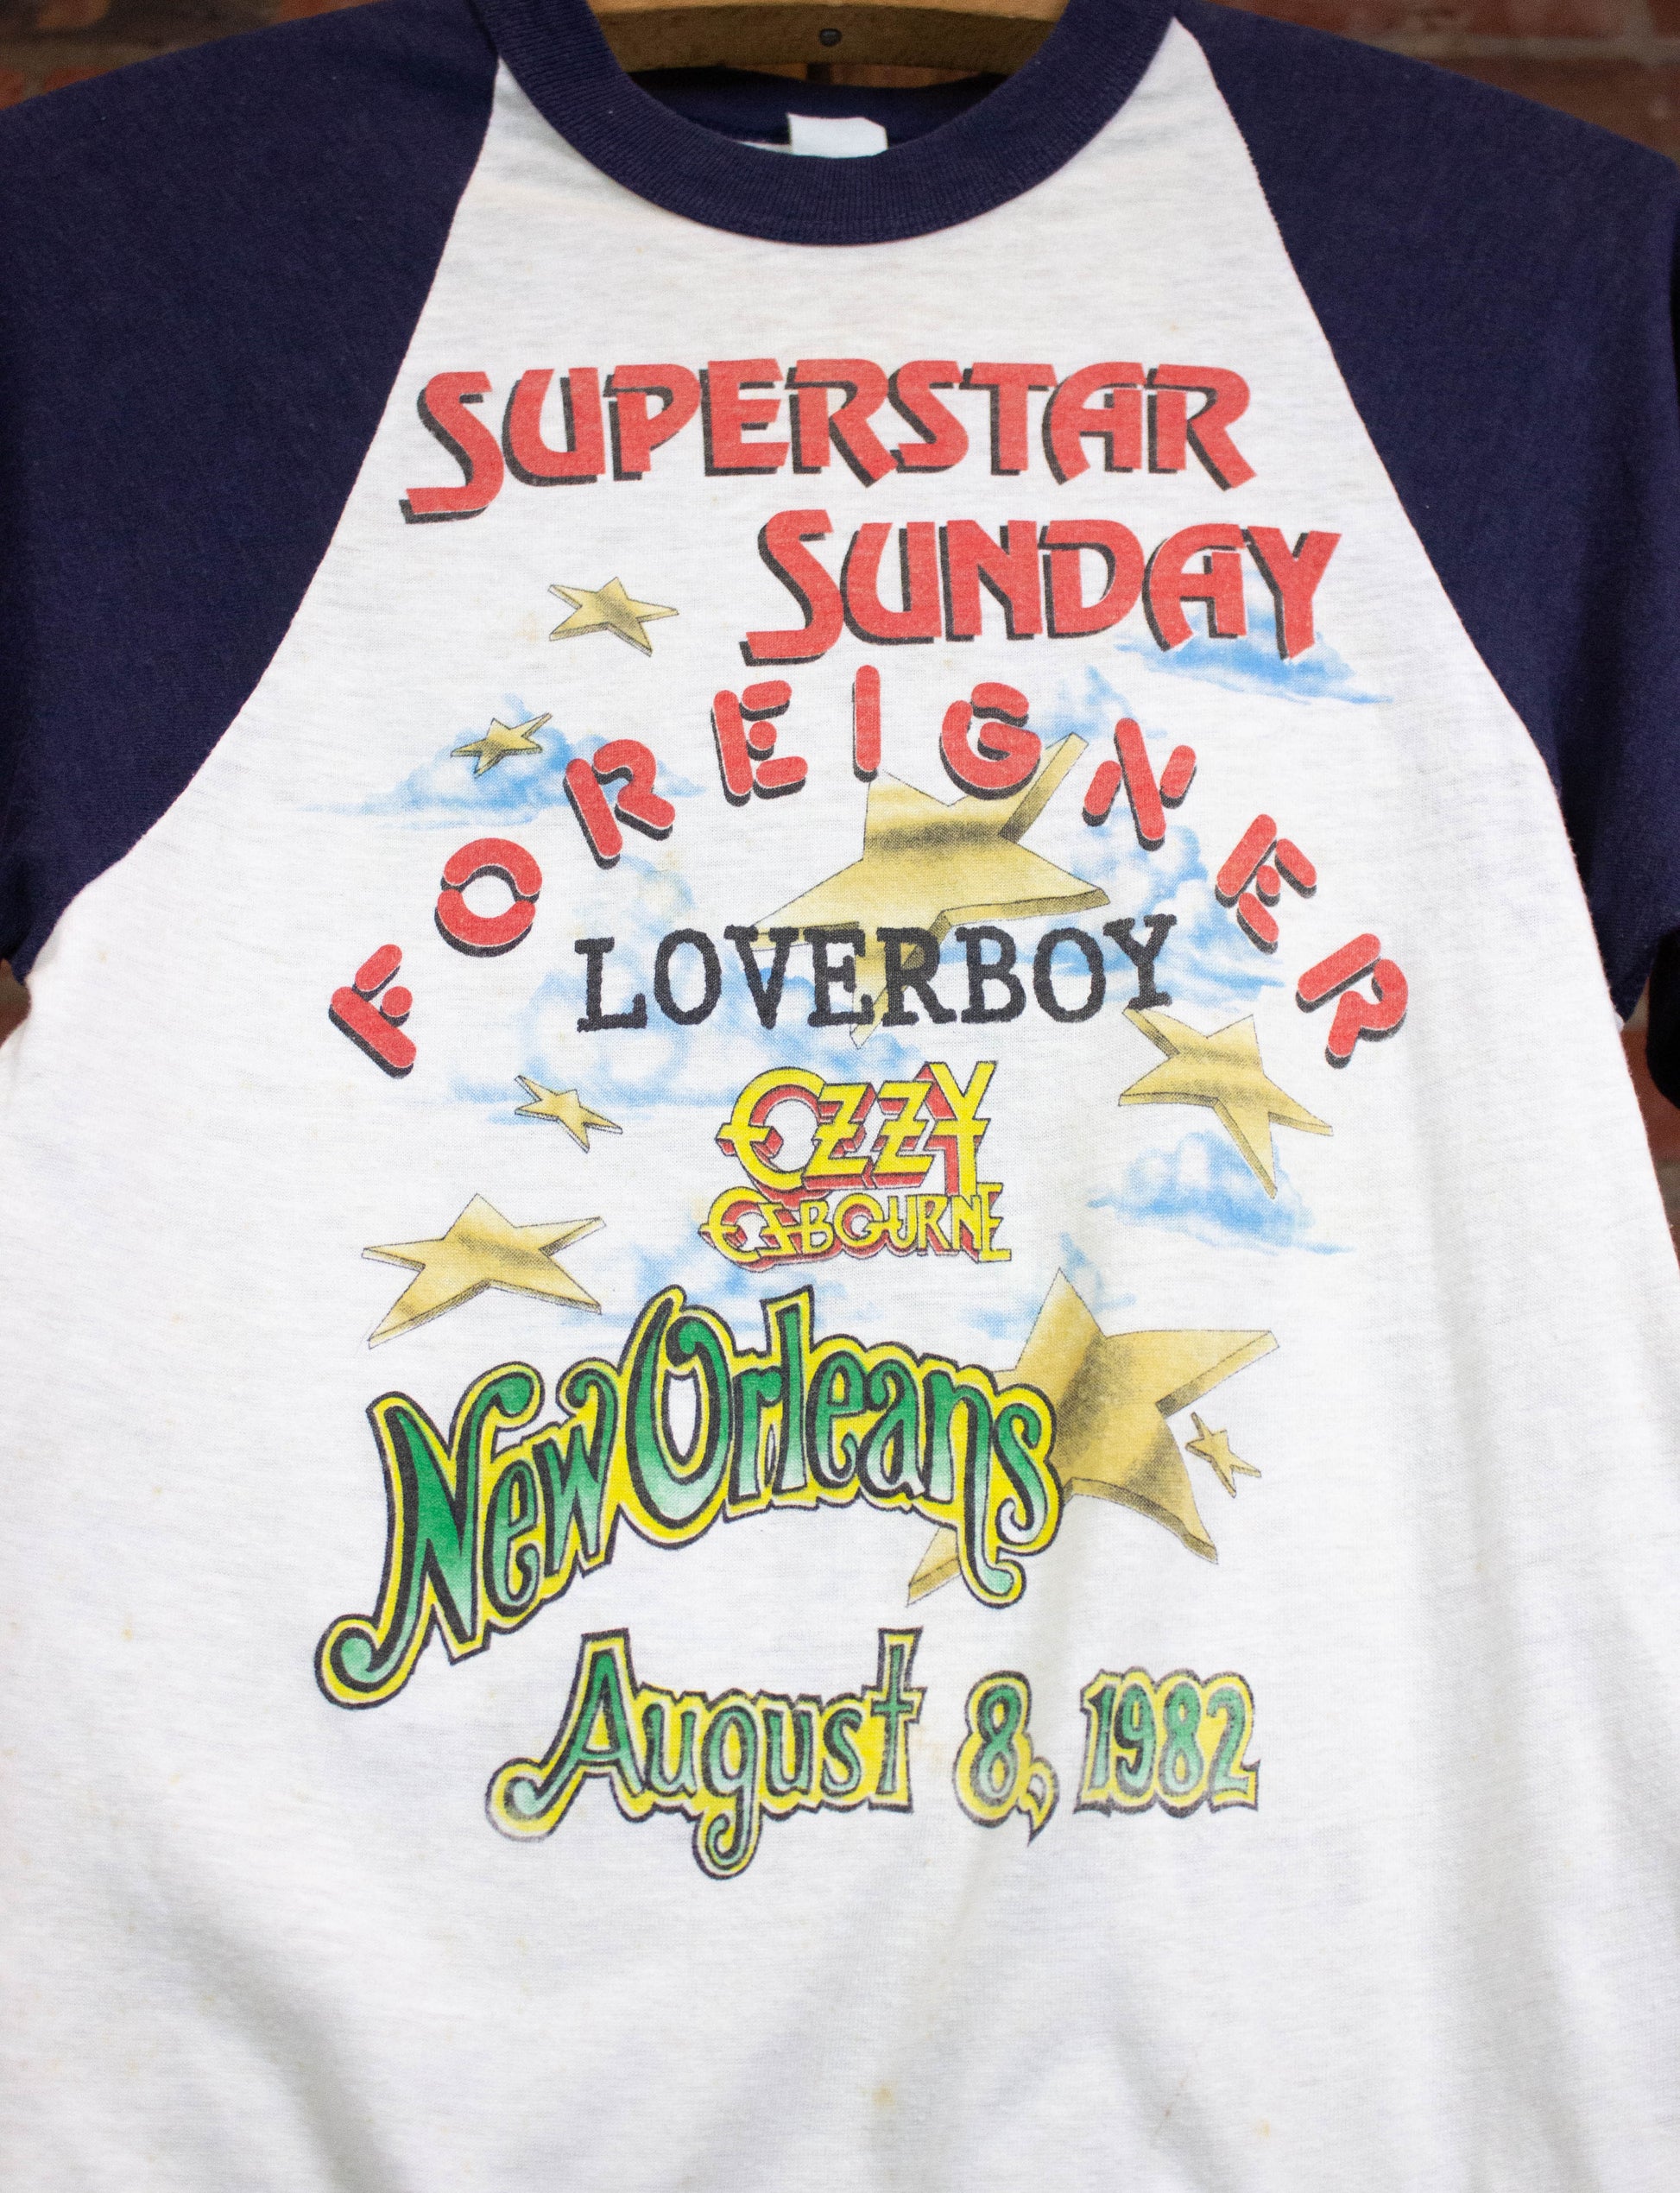 Vintage Superstar Sunday 1982 Festival Raglan Concert T Shirt White and Navy XS